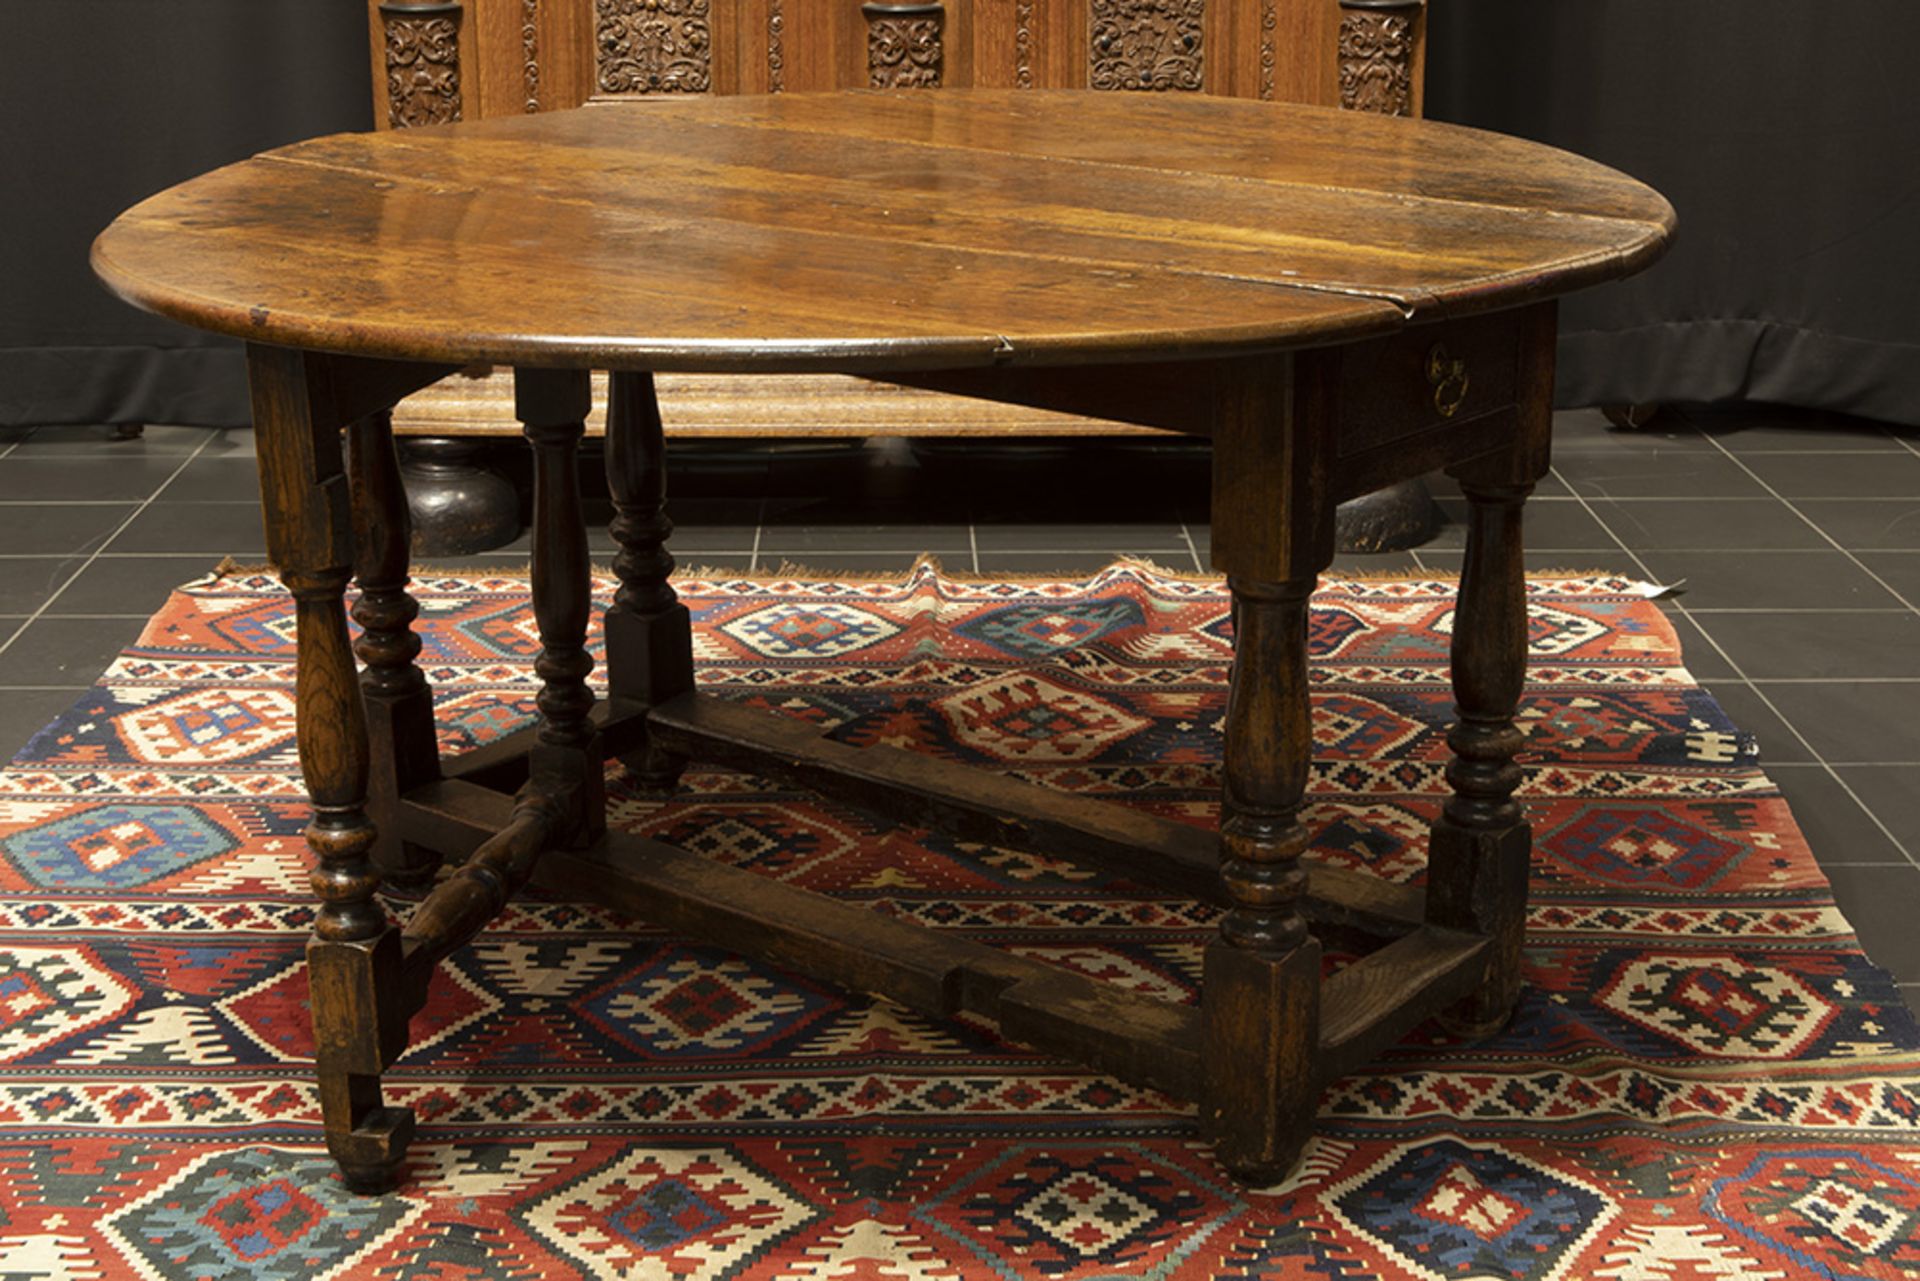 18th Cent. English oak gateleg table with drawer || Goede achttiende eeuwse Engelse gatelegtafel met